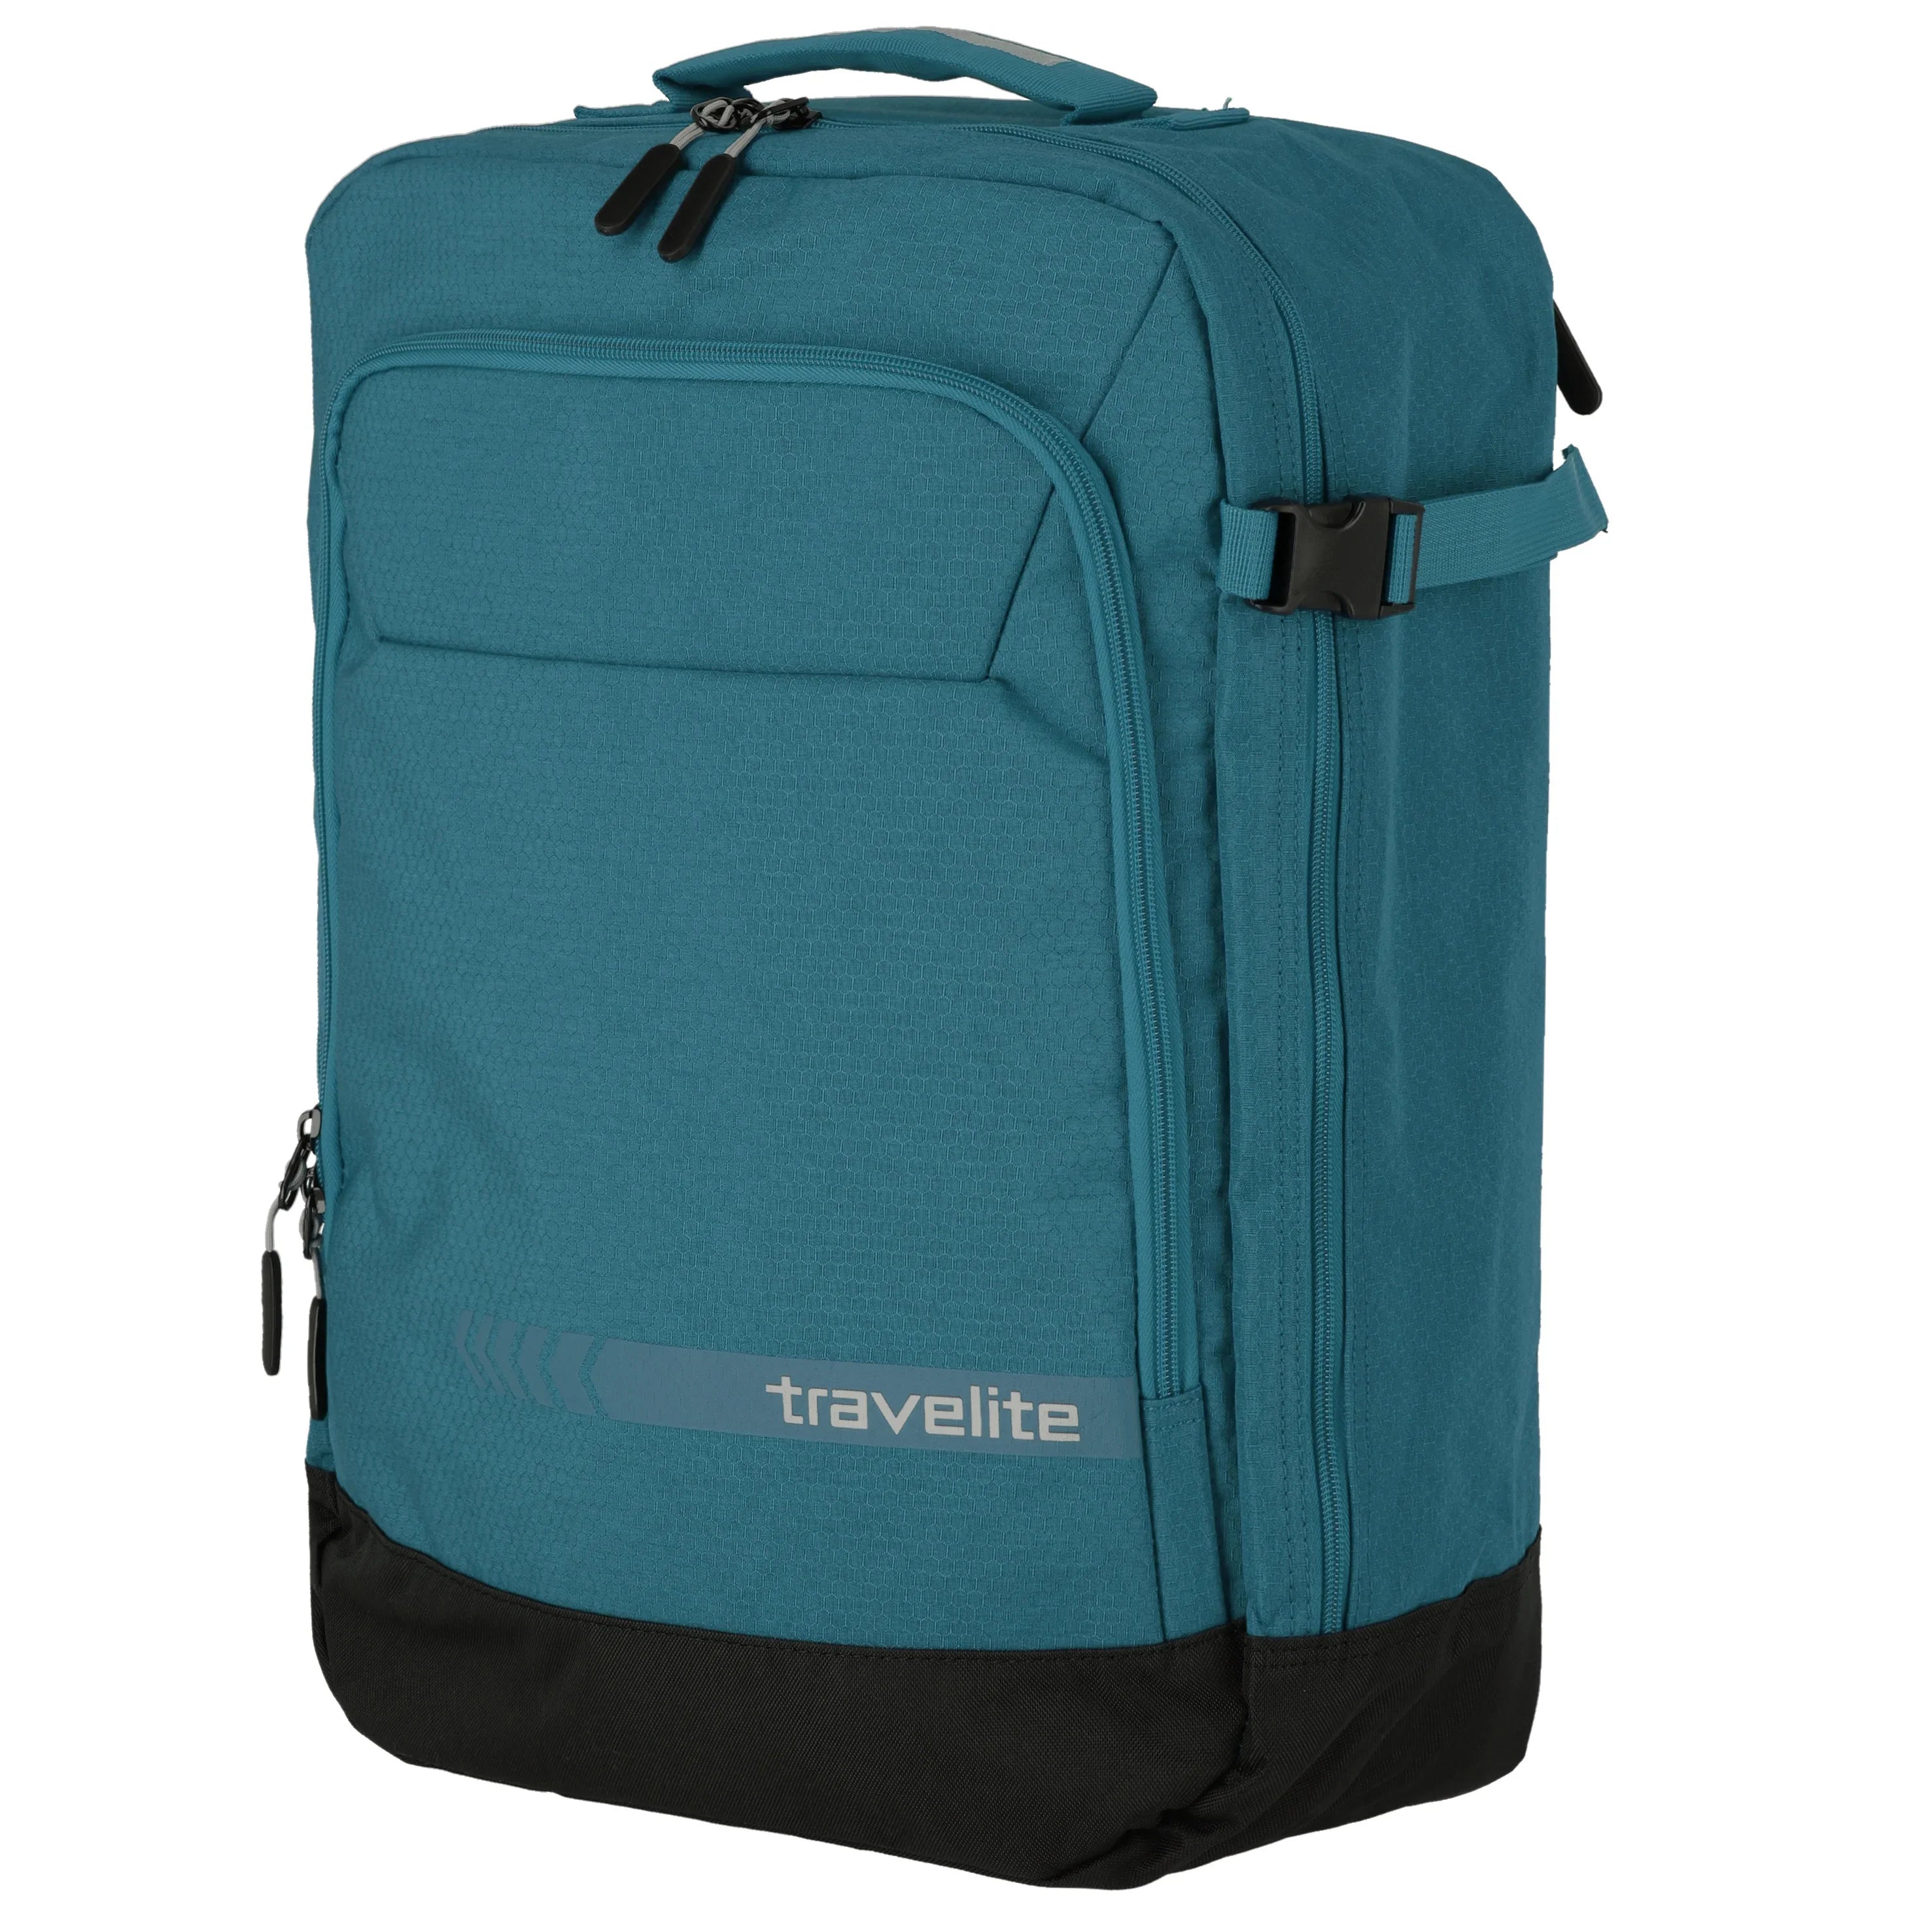 Travelite Kick Off backpack bag 50 cm - Petrol